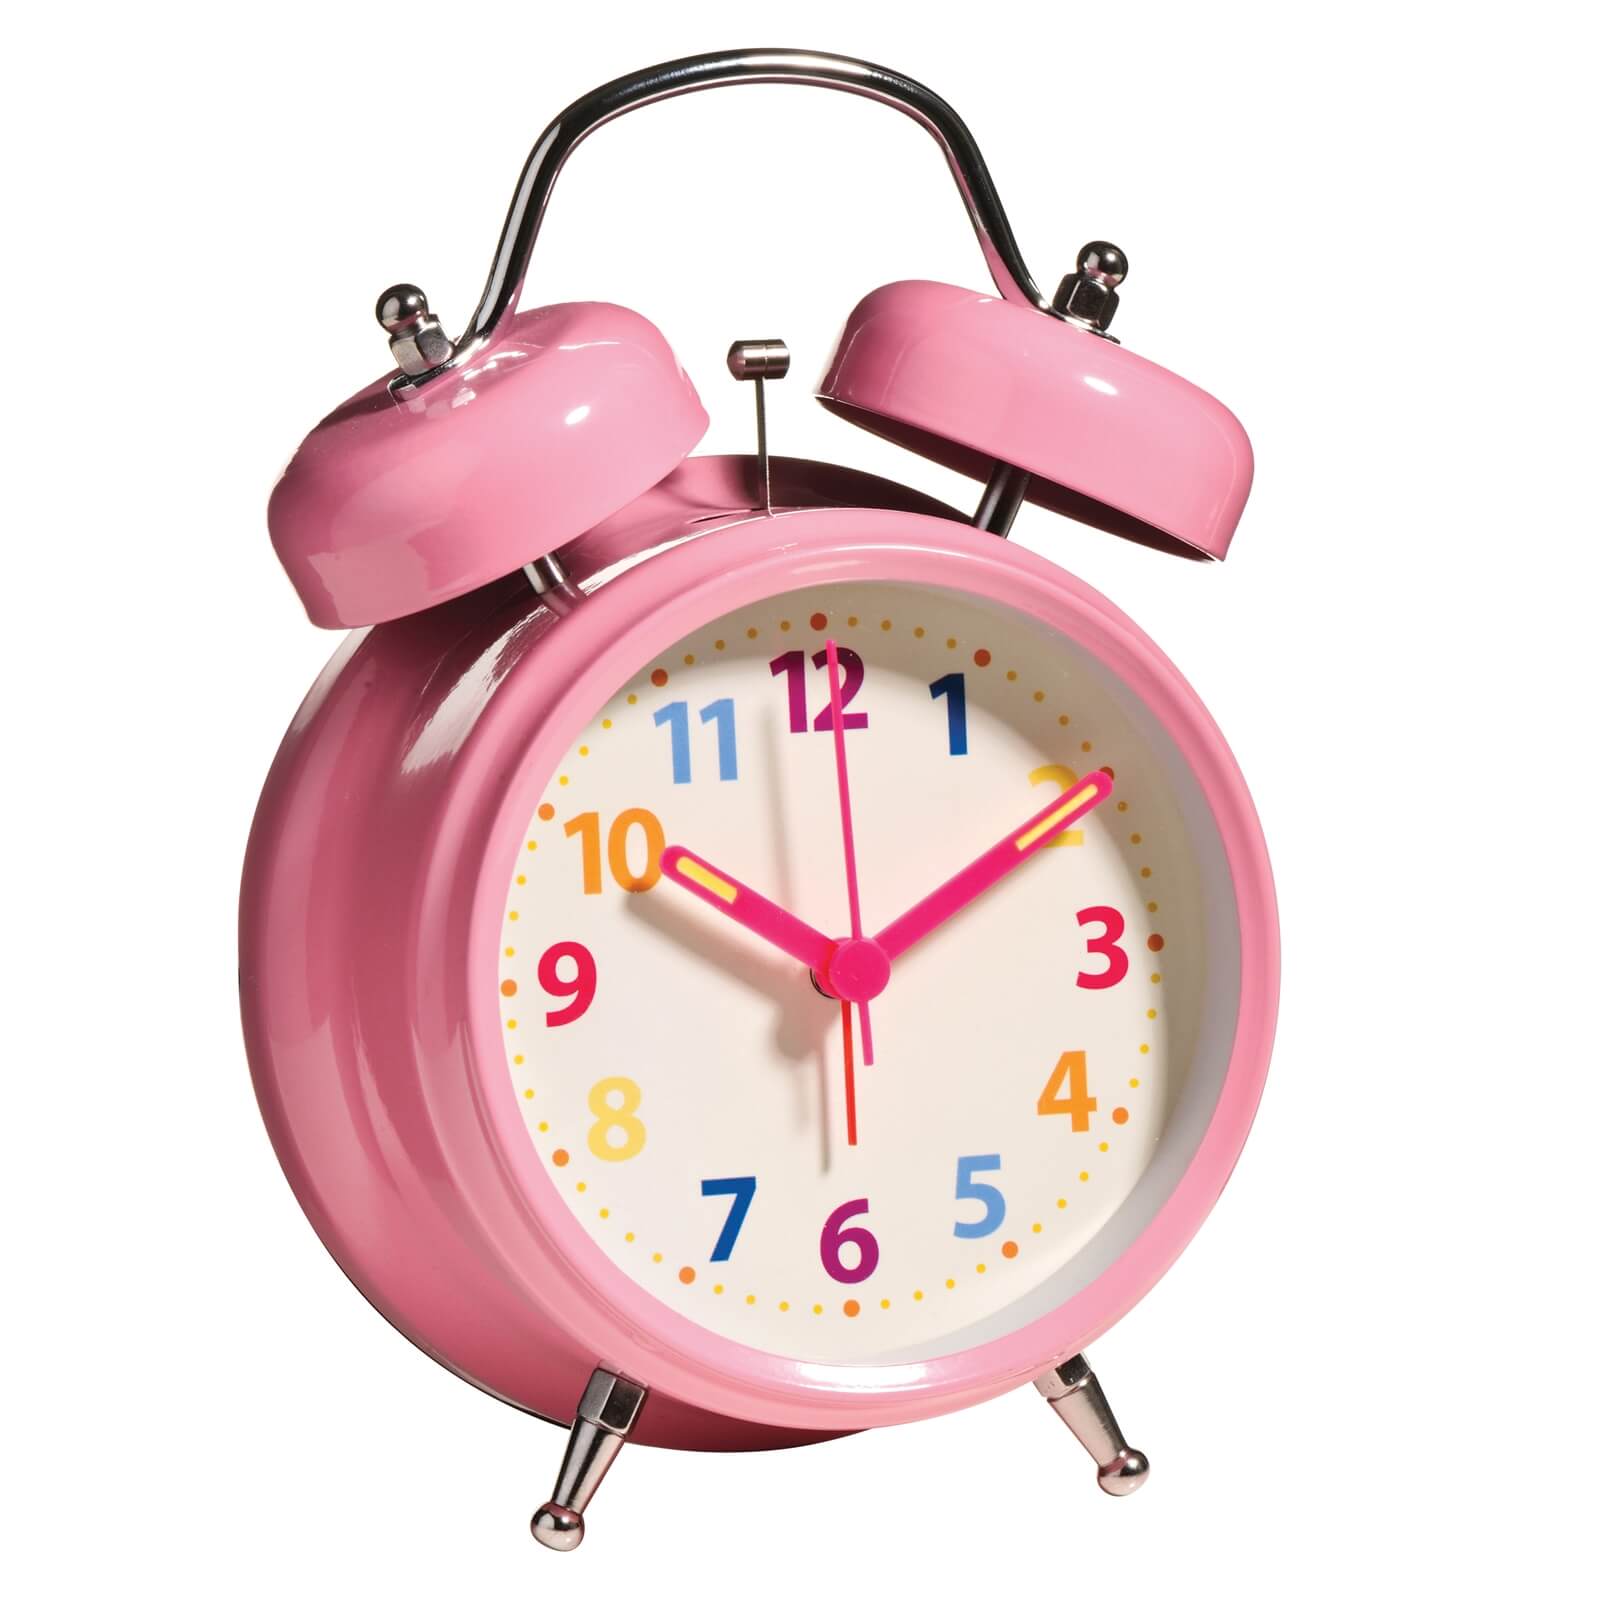 Twin Bell Alarm Clock - Pink